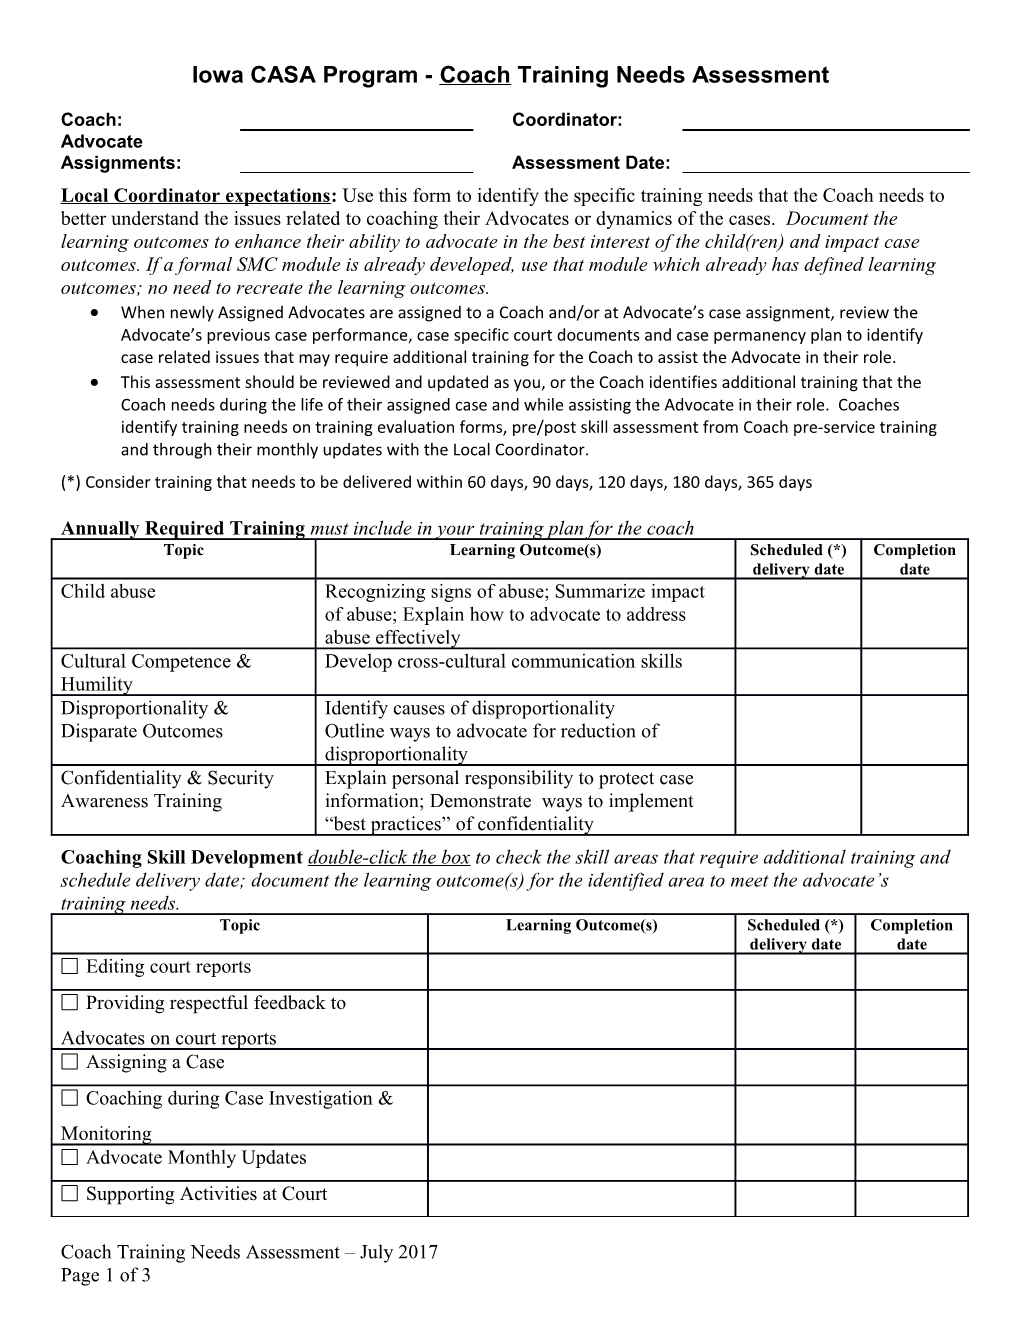 Iowa CASA Program - Coach Training Needs Assessment